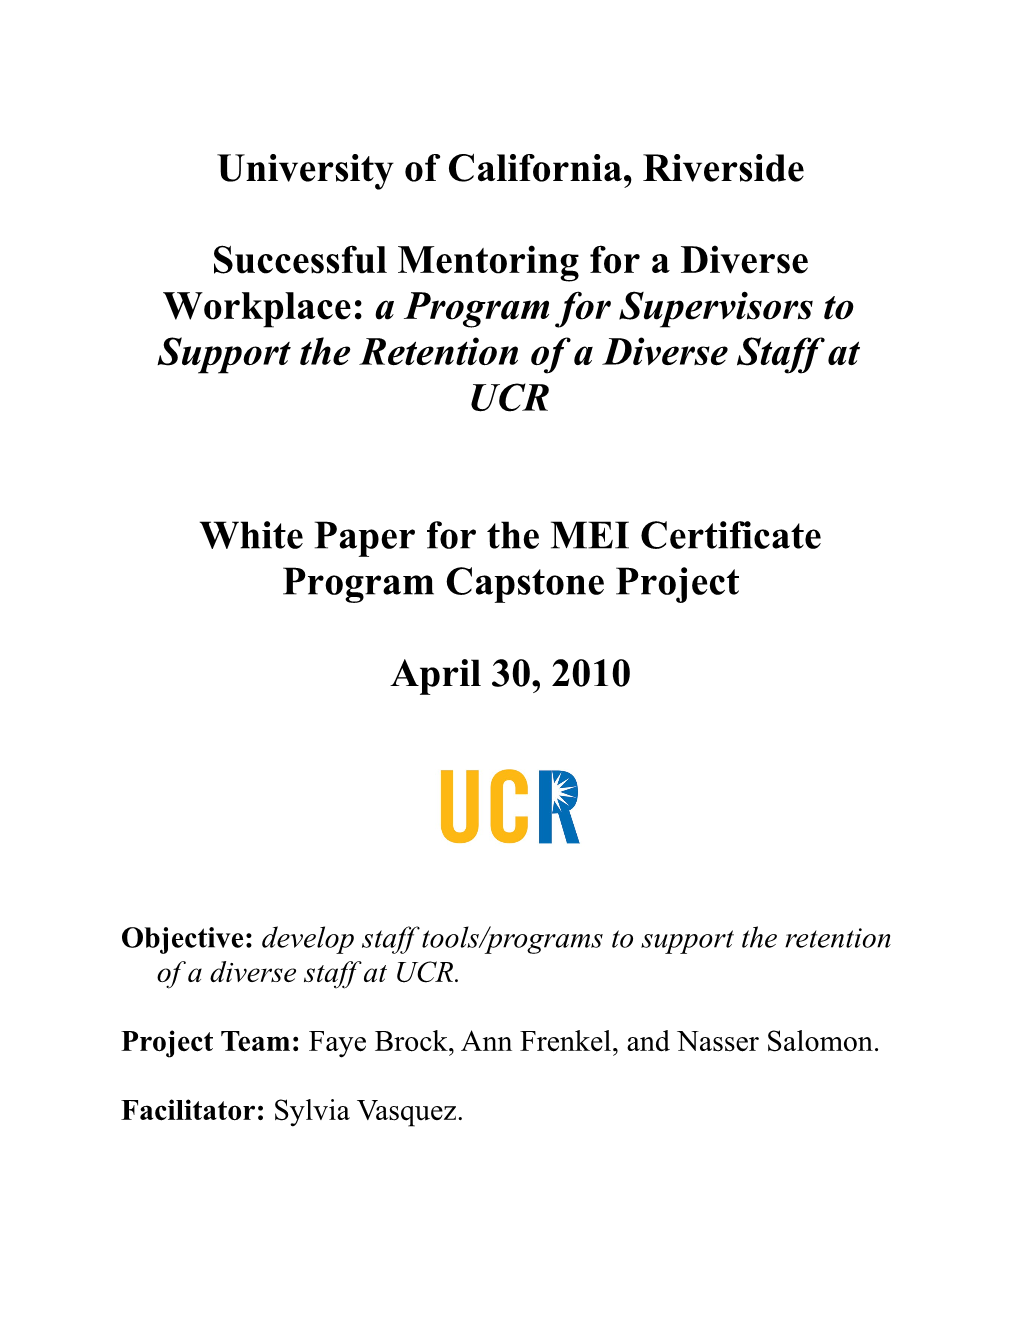 White Paper for the MEI Certificate Program Capstone Project